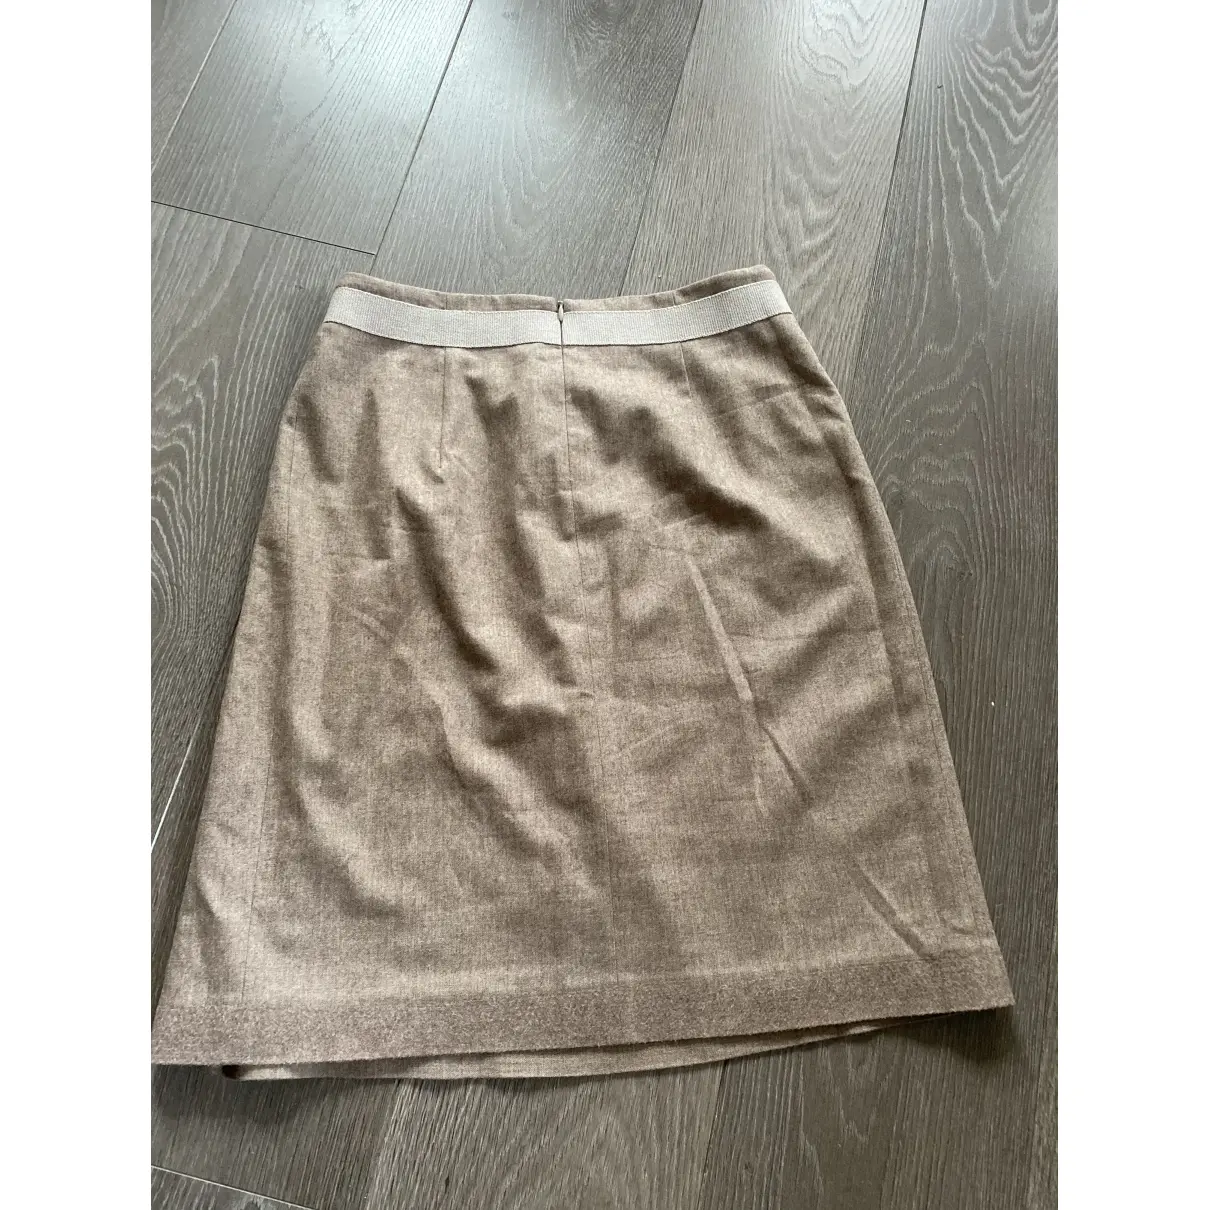 Buy Fabiana Filippi Wool skirt online